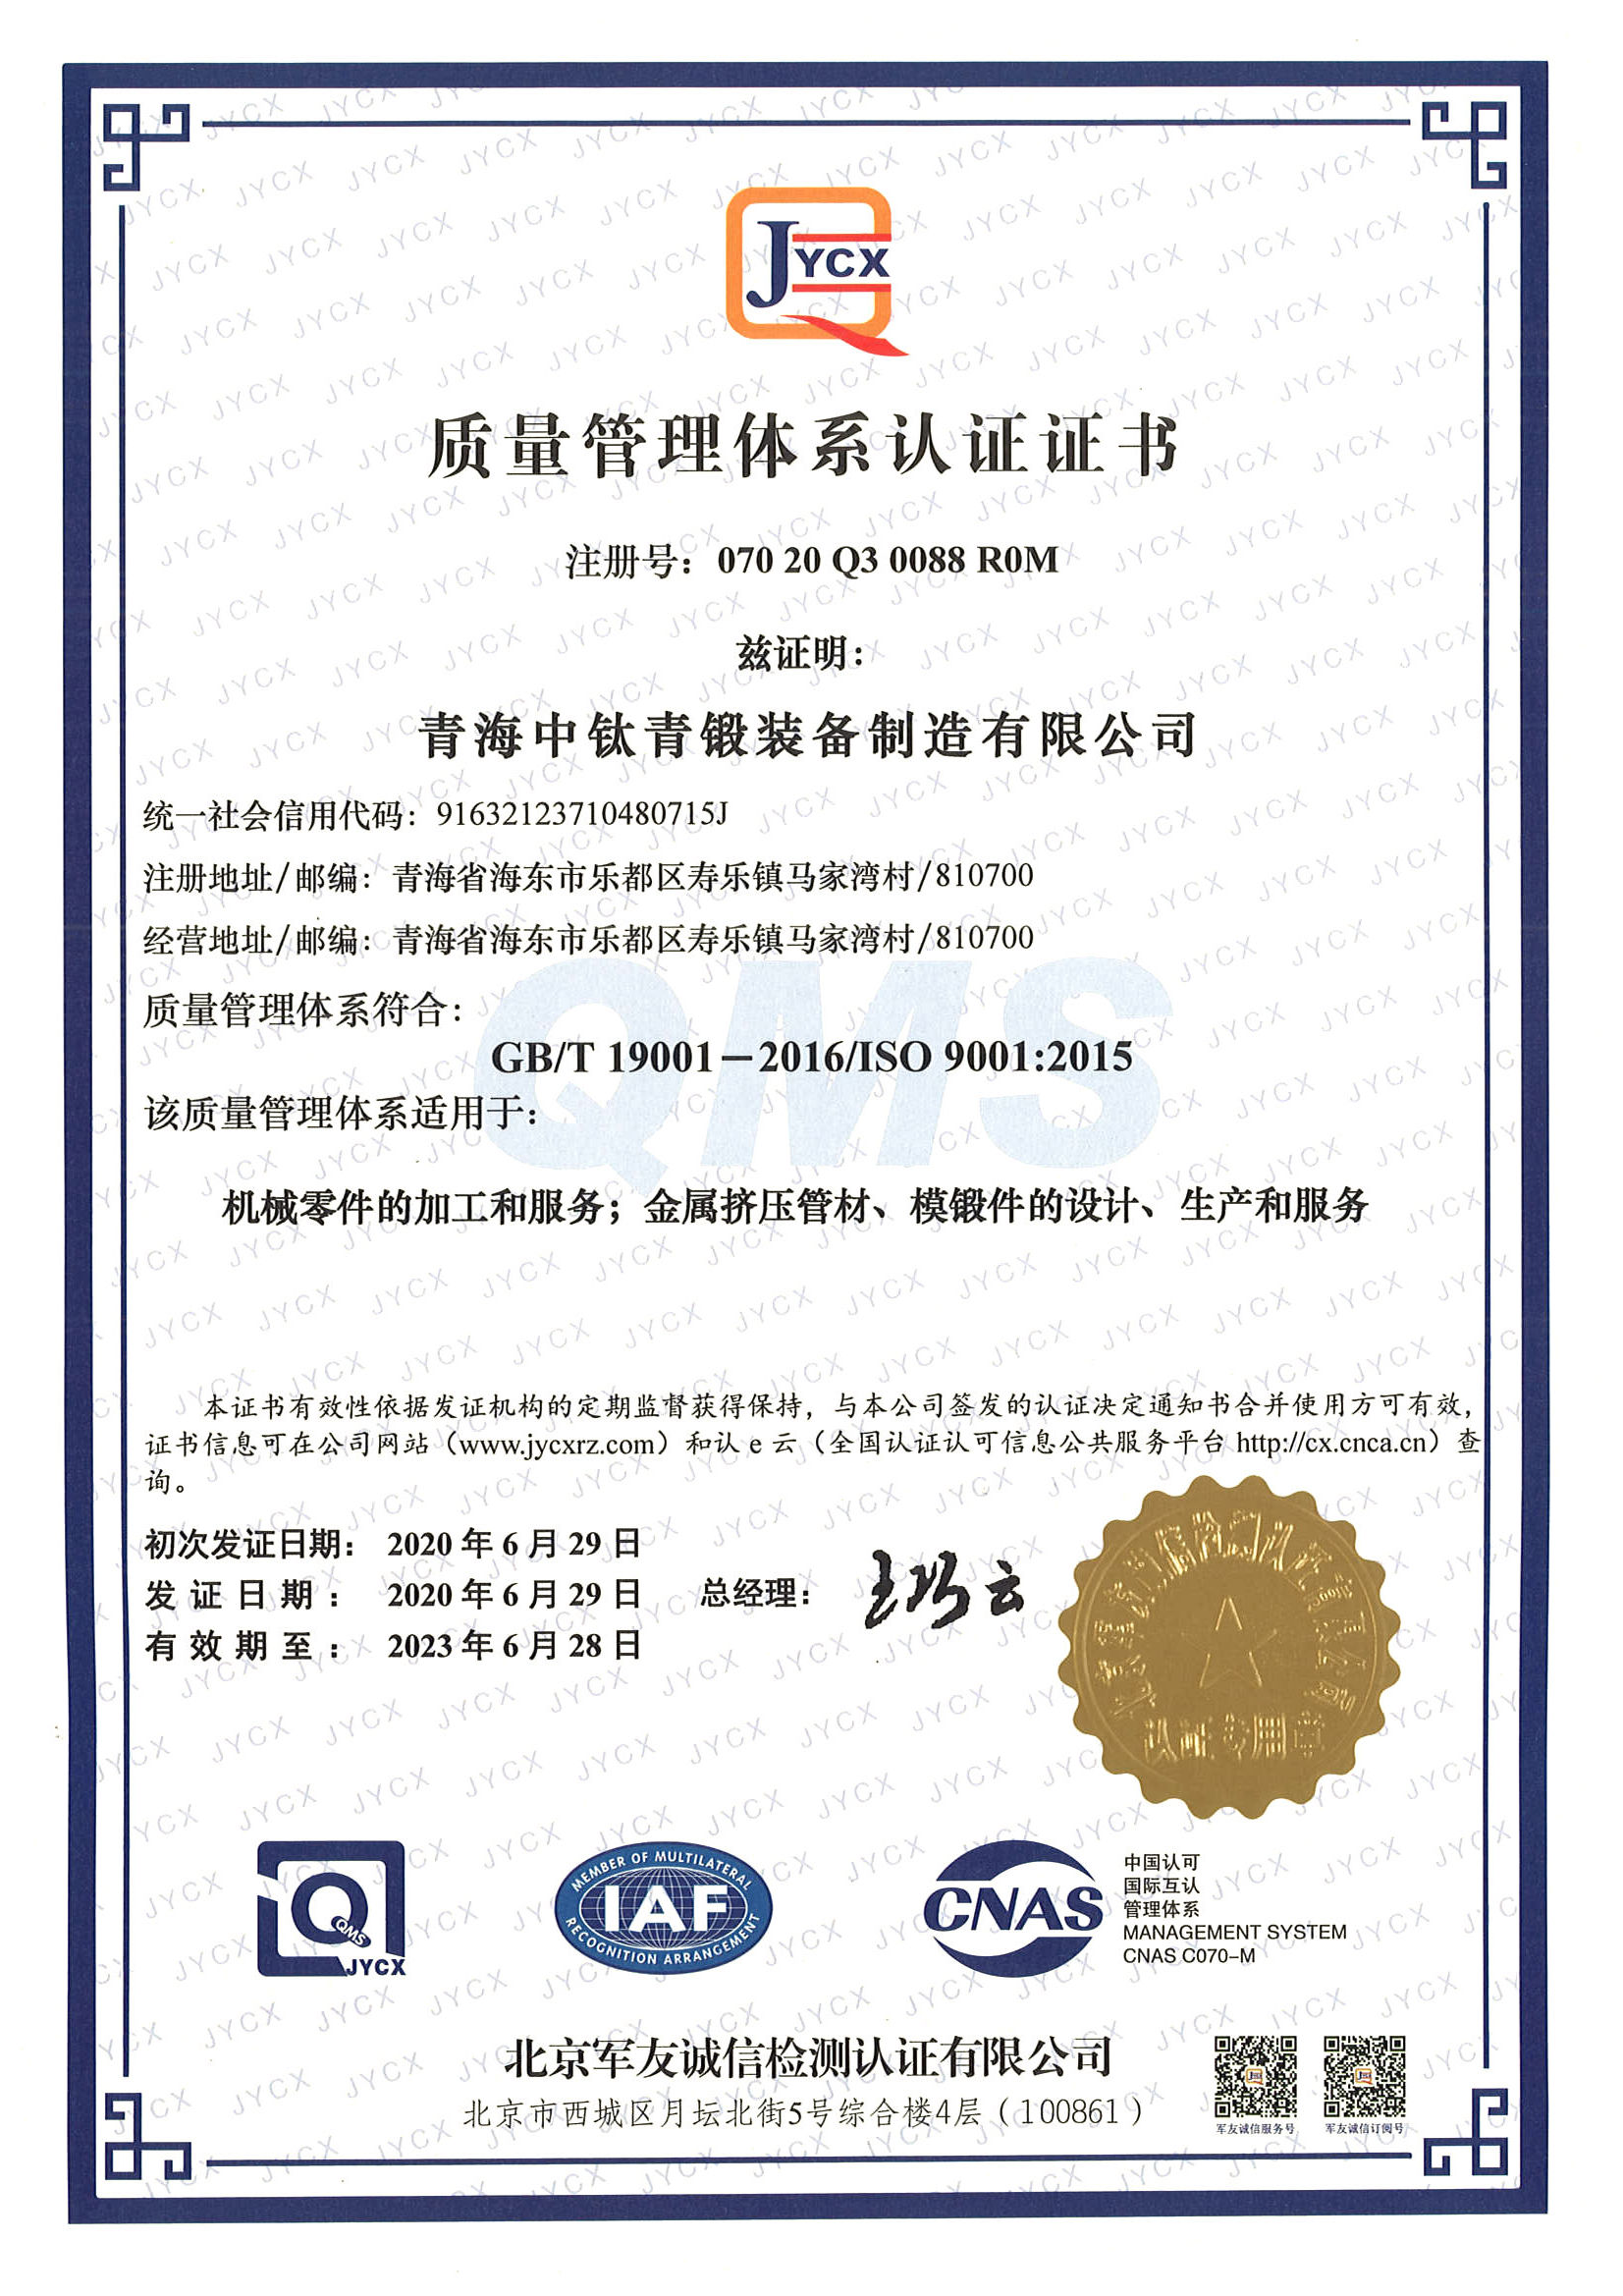 GB/T19001:2016/ISO9001:2015質量管理體系認證 